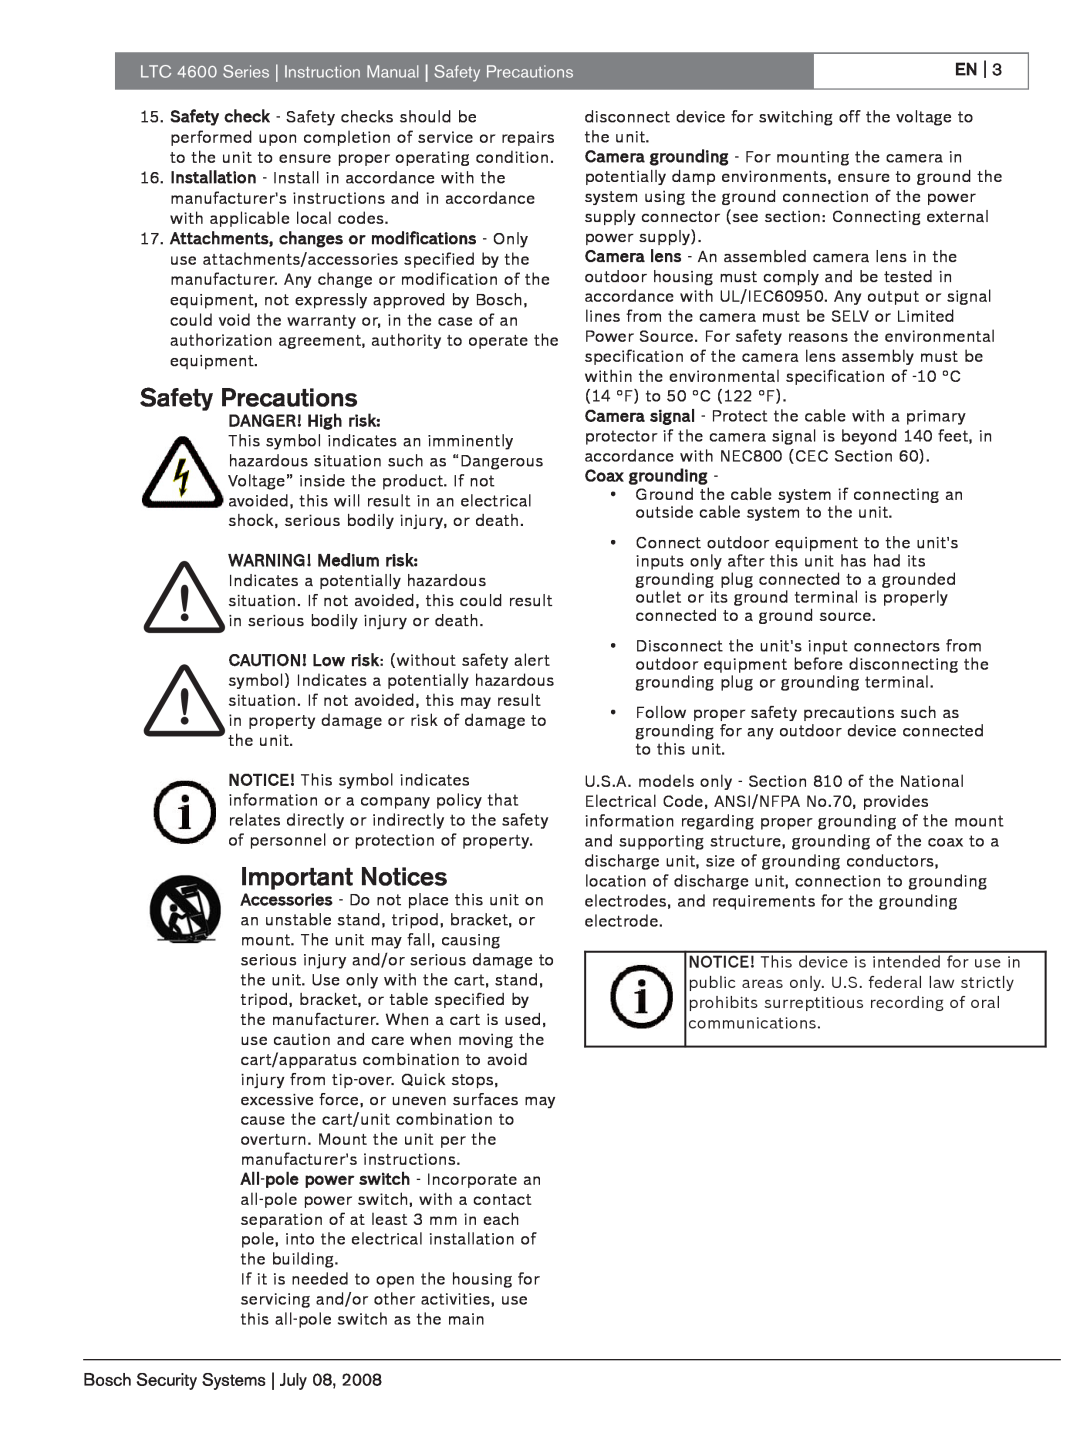 Bosch Appliances LTC 4600 Safety Precautions, Important Notices, En, Bosch Security Systems July, DANGER! High risk 